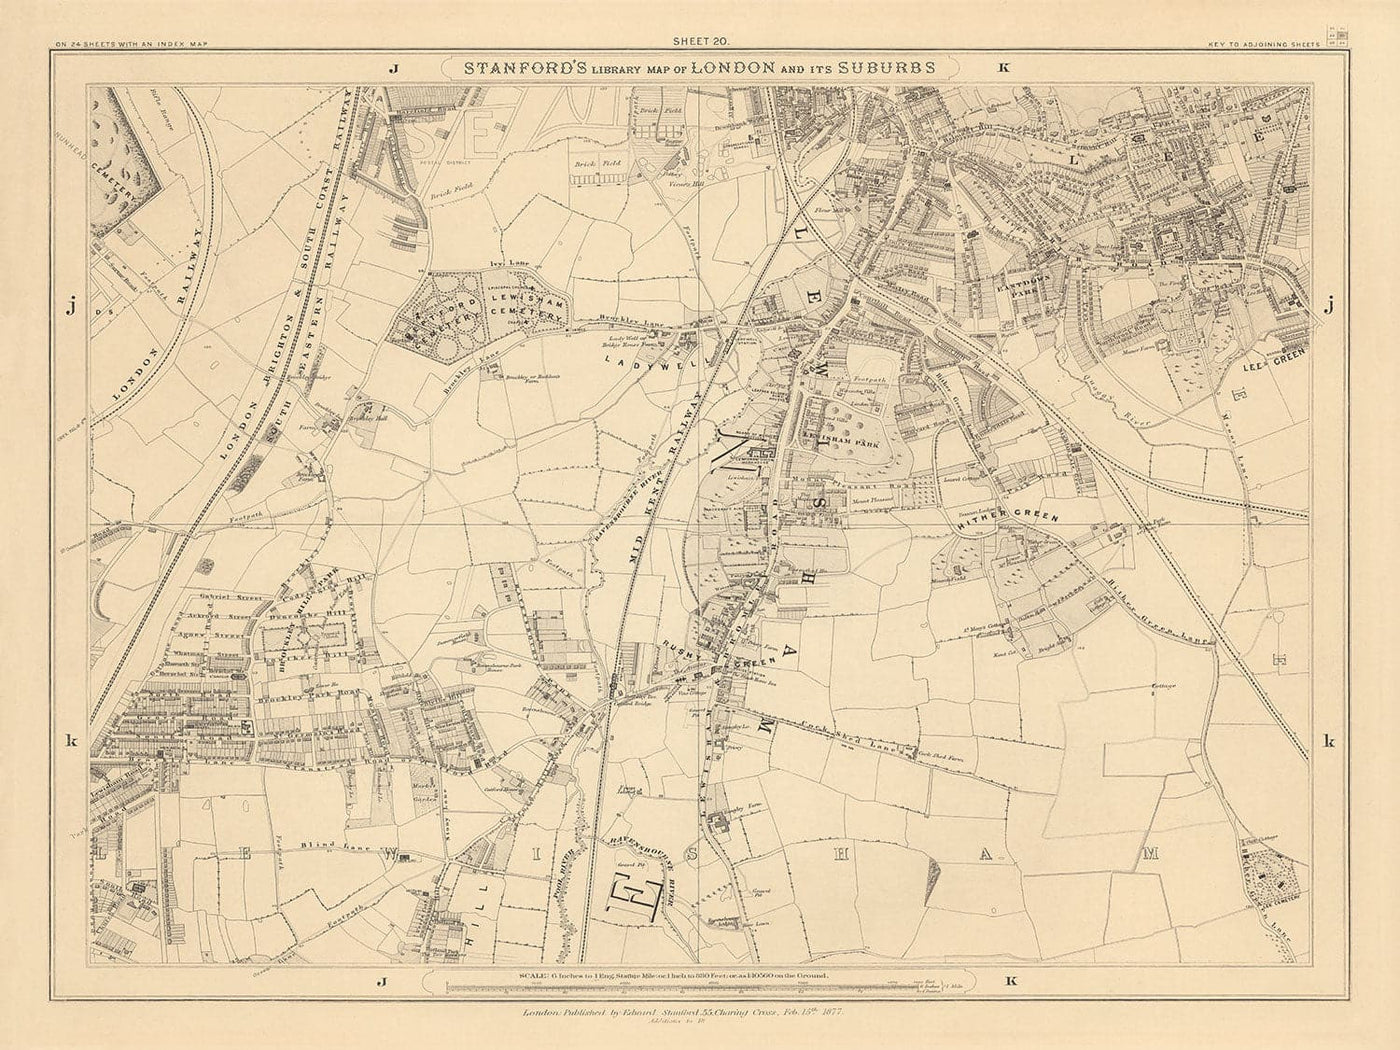 Old Map of South East London by Edward Stanford, 1862 - Lewisham, Ladywell, Brockley, Catford - SE4, SE13, SE23, SE6